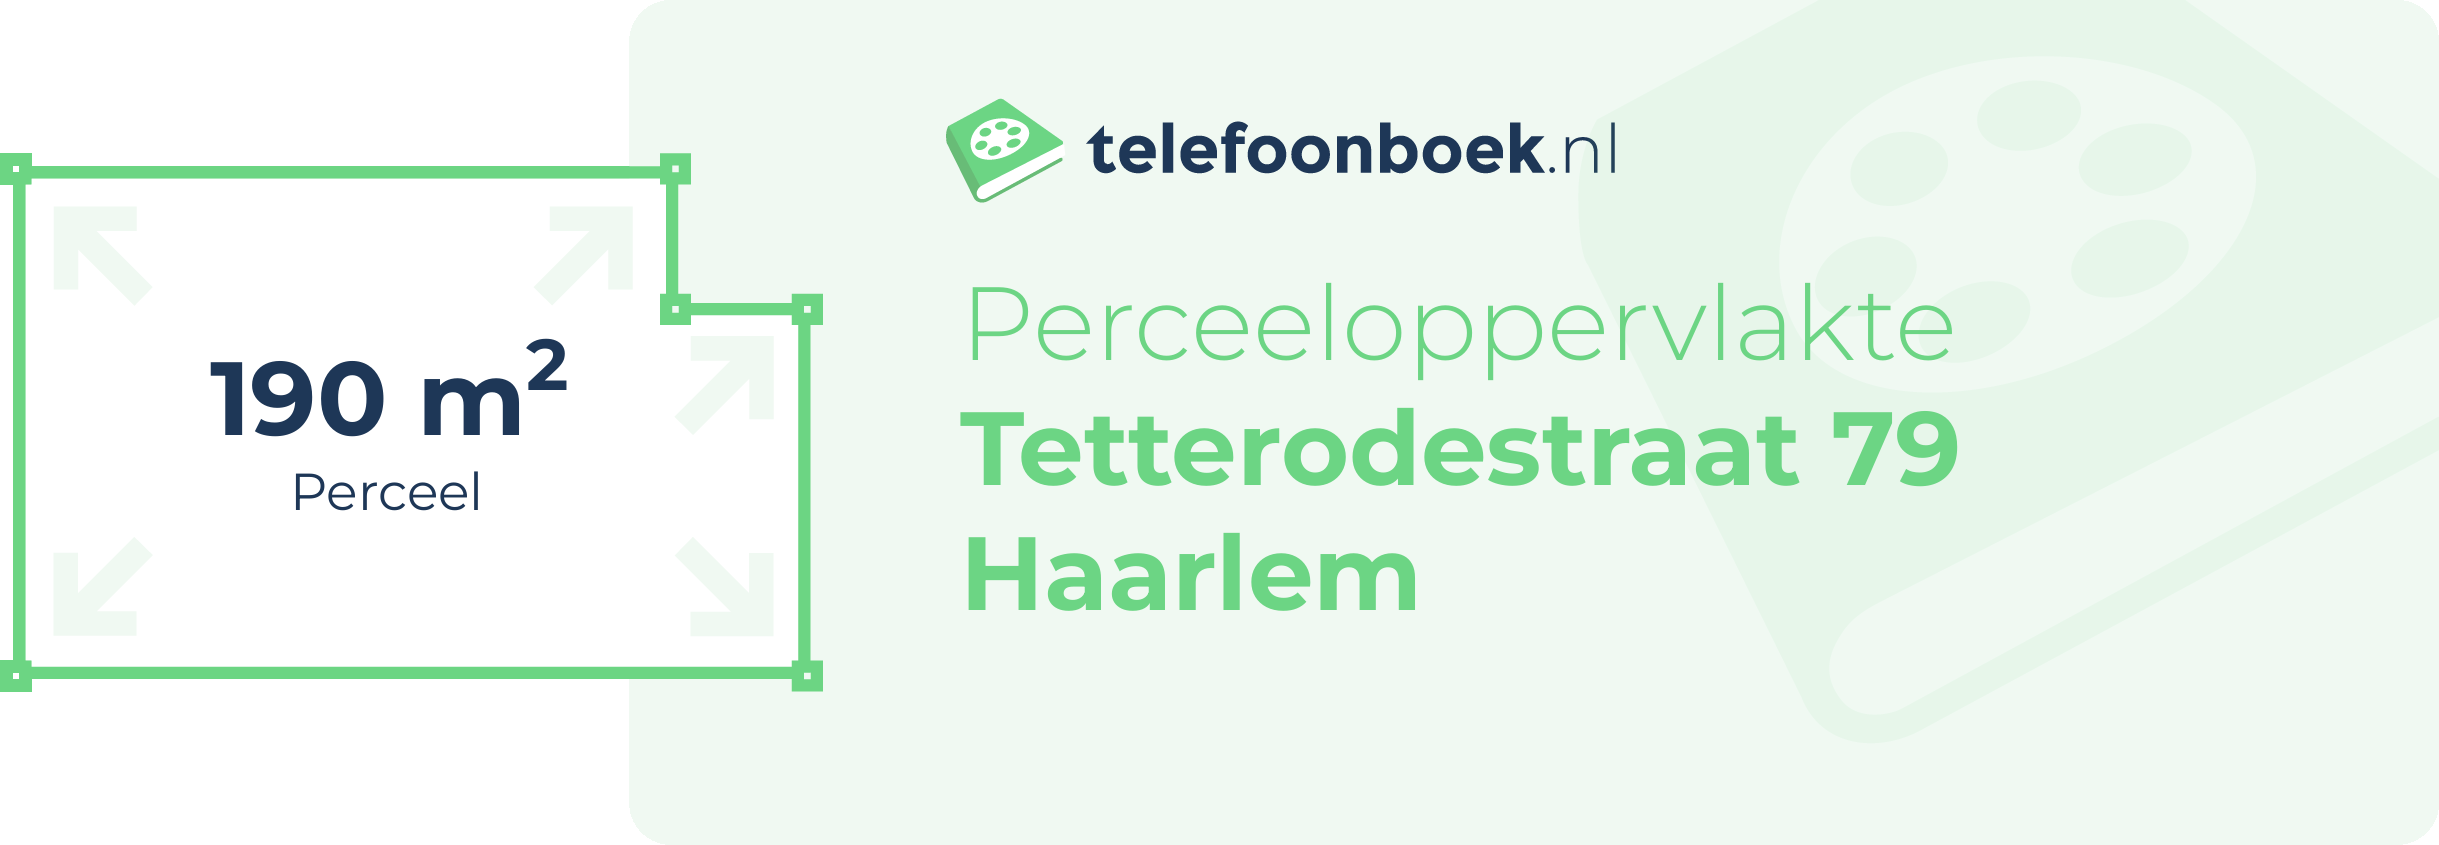 Perceeloppervlakte Tetterodestraat 79 Haarlem